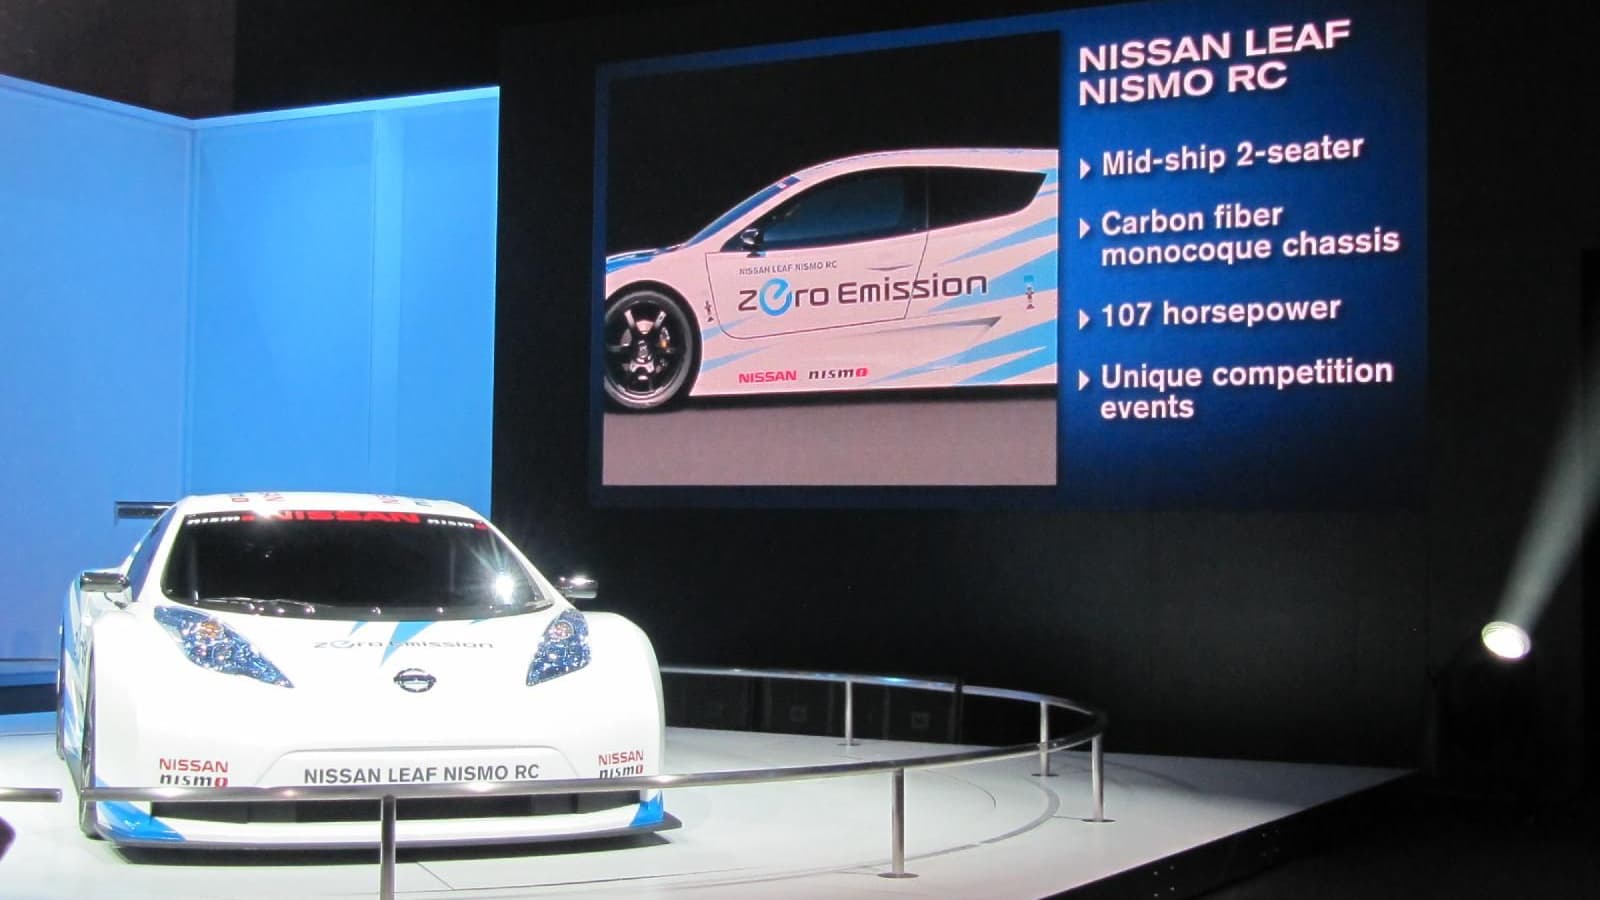 2012 Nissan Leaf Nismo RC Concept, New York Auto Show, April 2011